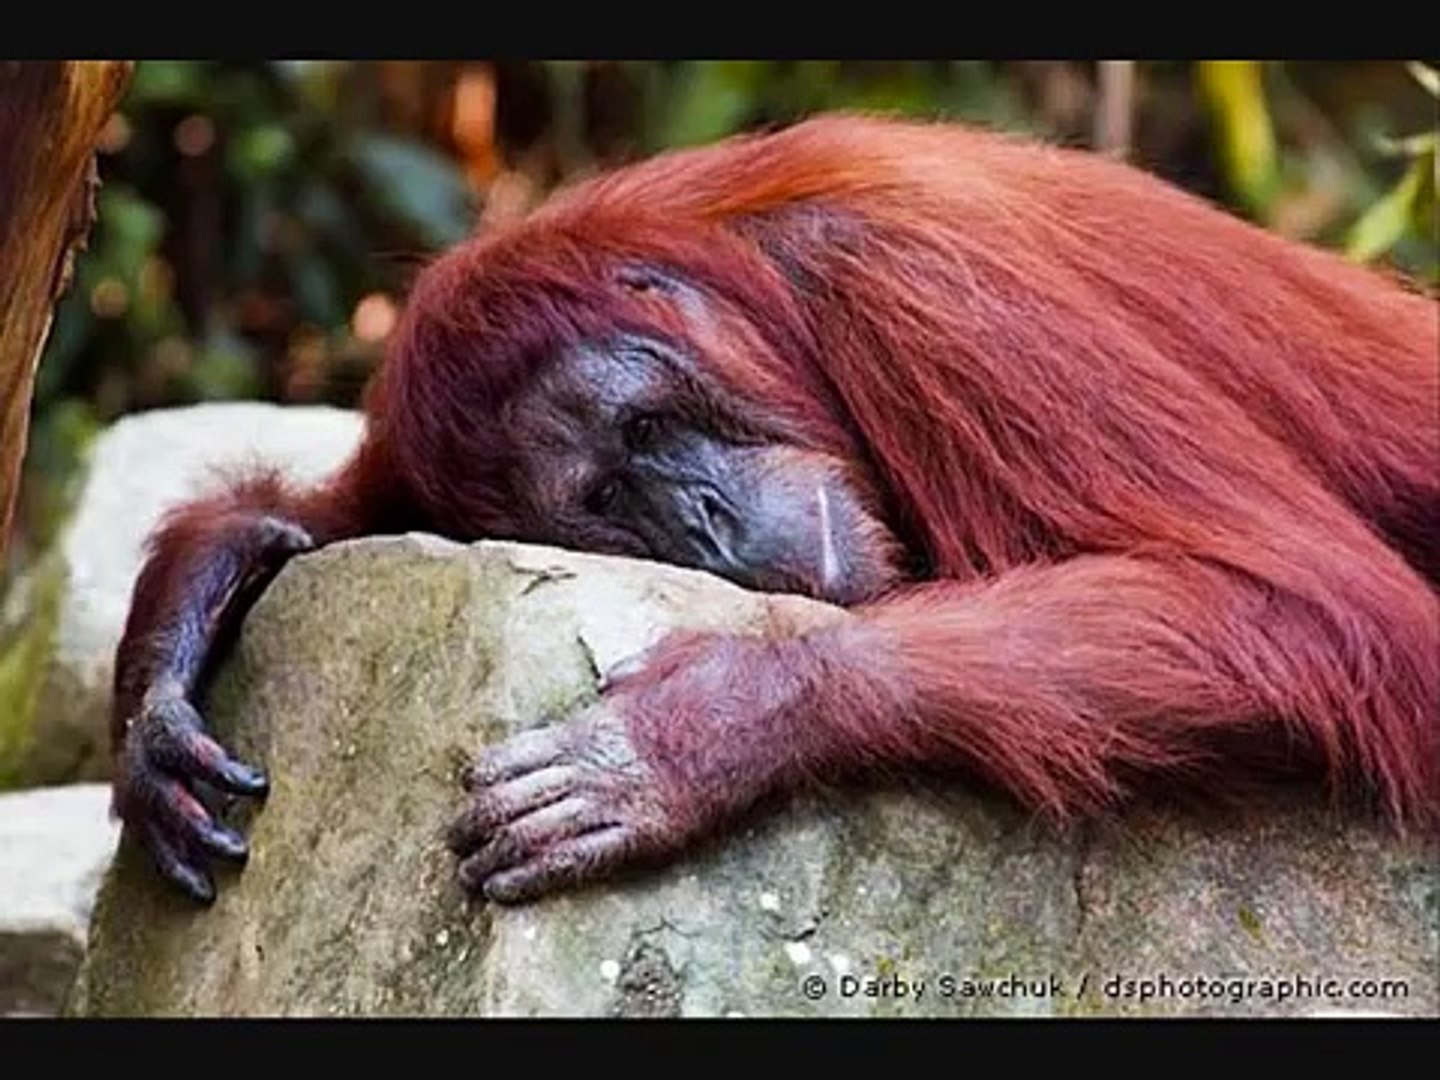 Save the Orangutan - Stop Palm Oil